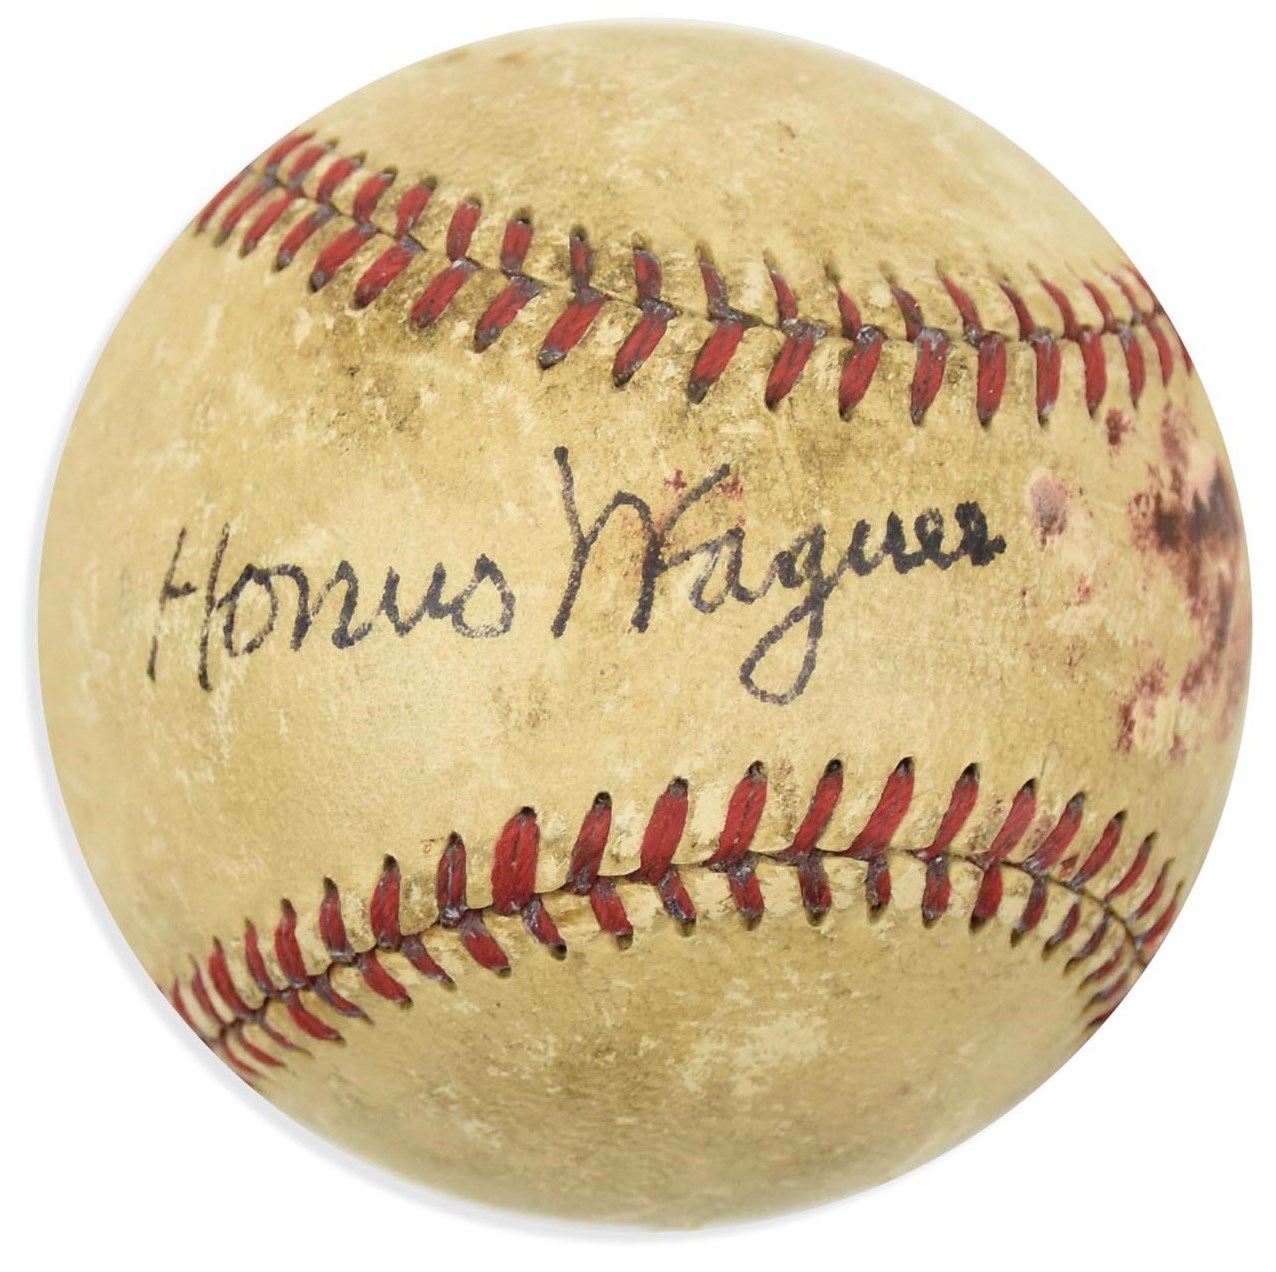 - Circa 1950 Honus Wagner Single Signed Baseball (PSA 8 Signature)